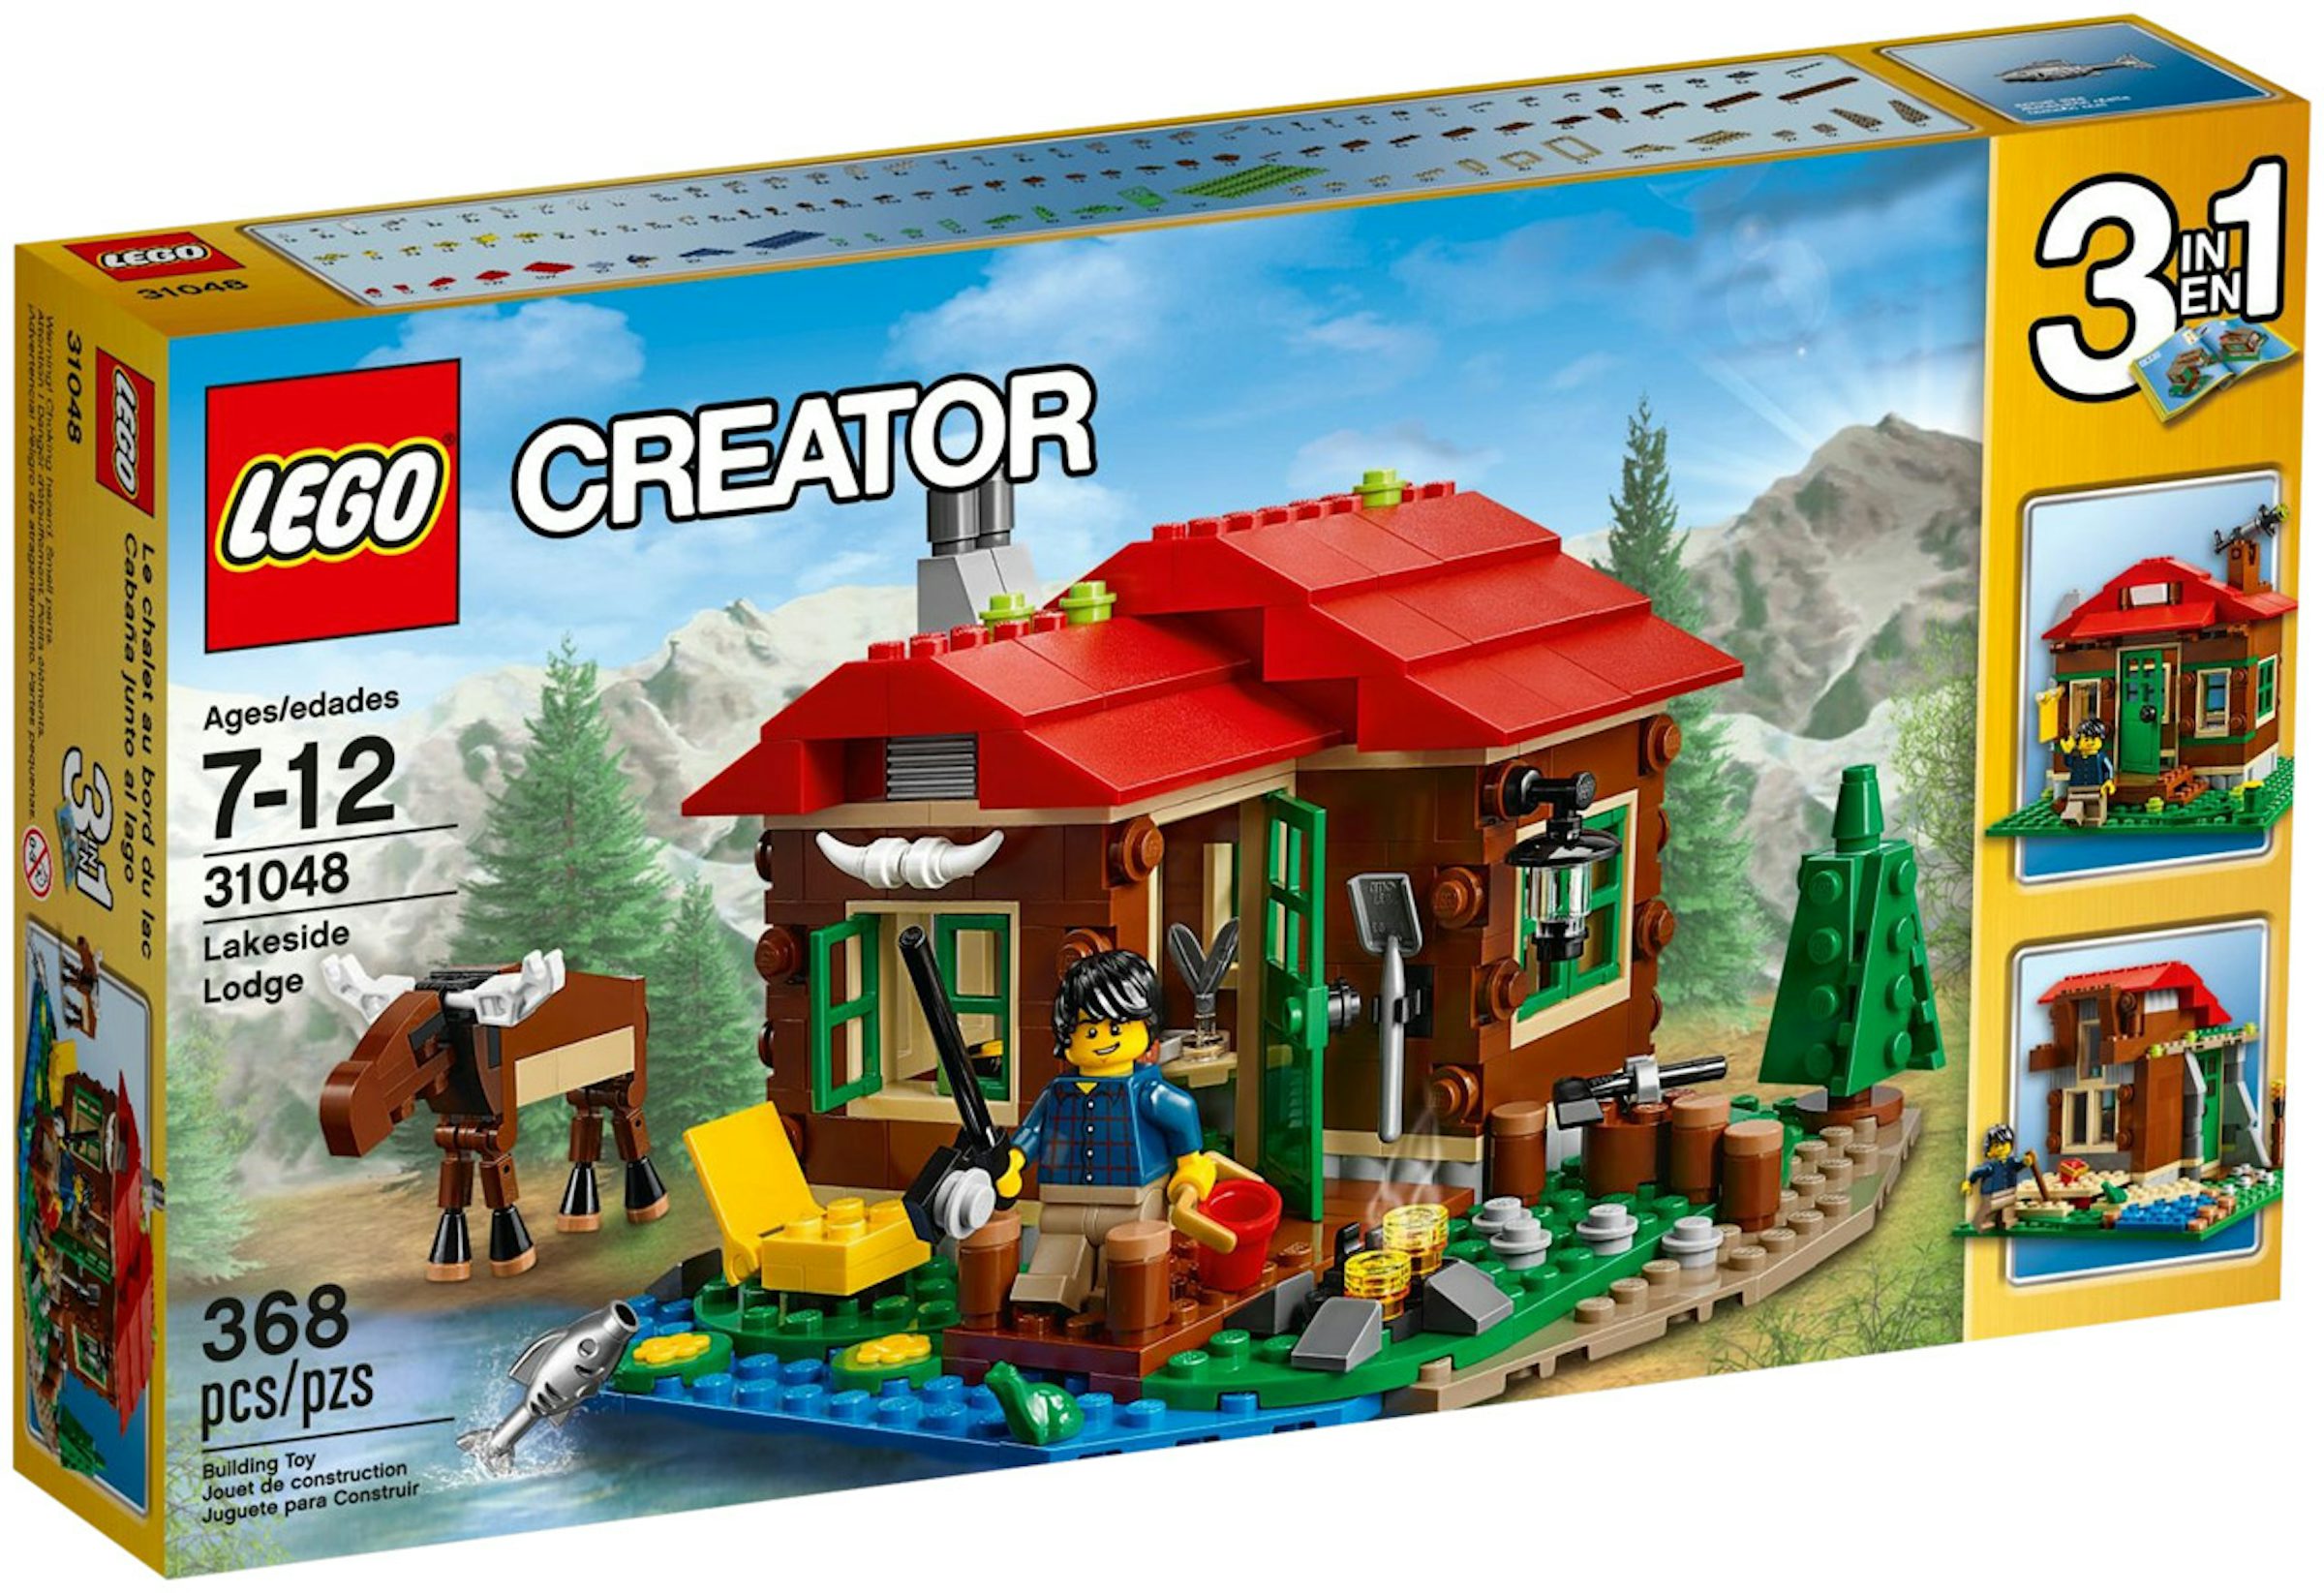 https://images.stockx.com/images/LEGO-Creator-Lakeside-Lodge-Set-31048.jpg?fit=fill&bg=FFFFFF&w=1200&h=857&fm=jpg&auto=compress&dpr=2&trim=color&updated_at=1643043530&q=60